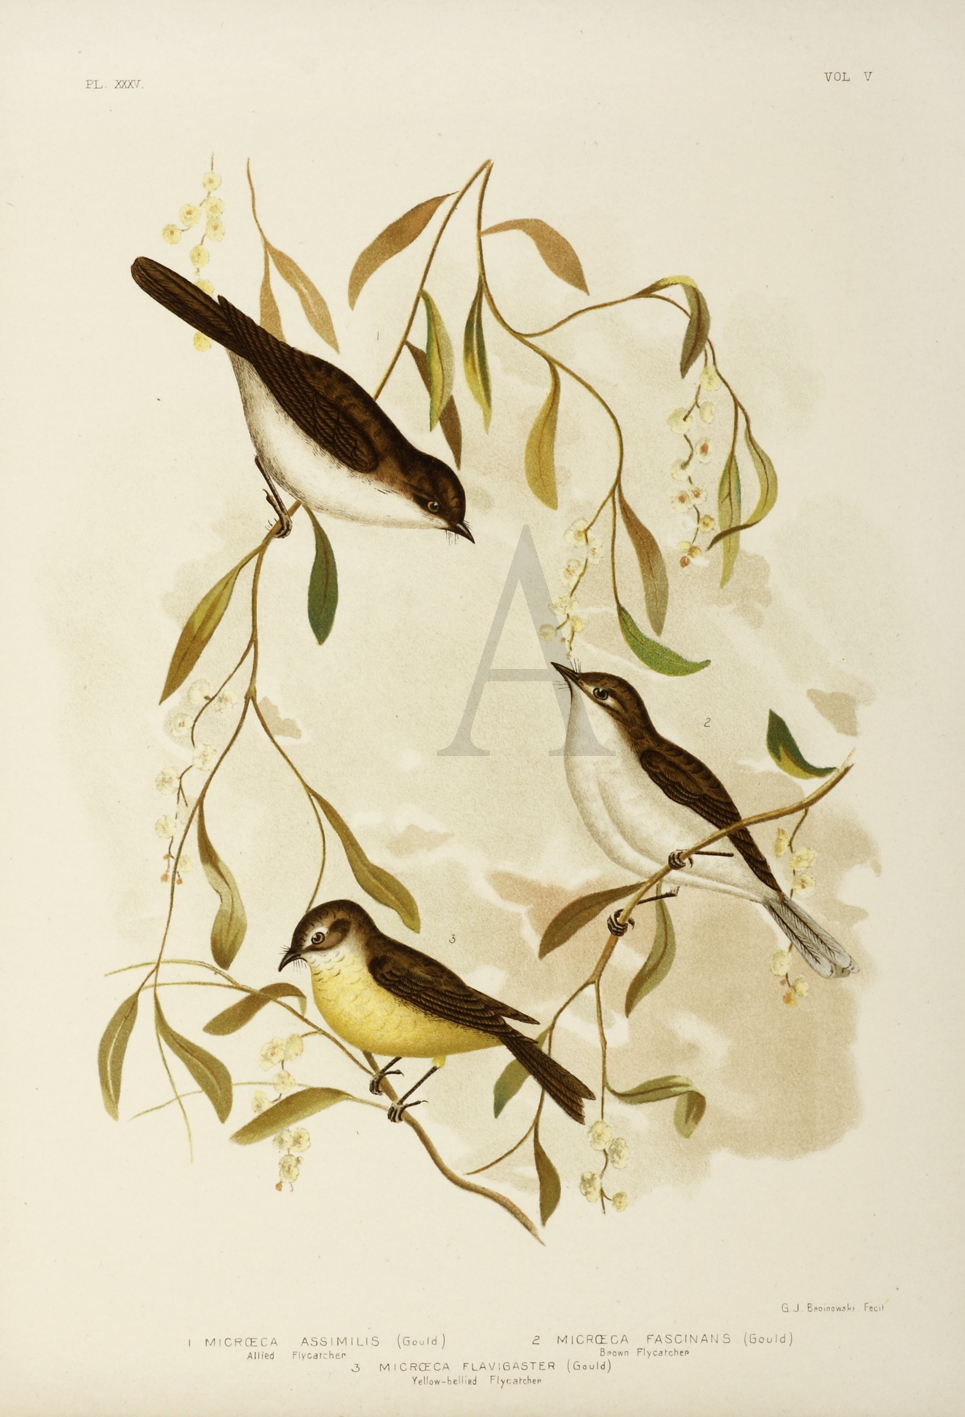 1. Microeca Assimilis. Allied Flycatcher. 2. Microeca Fascinans. Brown Flycatcher. 3. Microeca Flavigaster. Yellow-bellied Flycatcher. - Antique Print from 1889